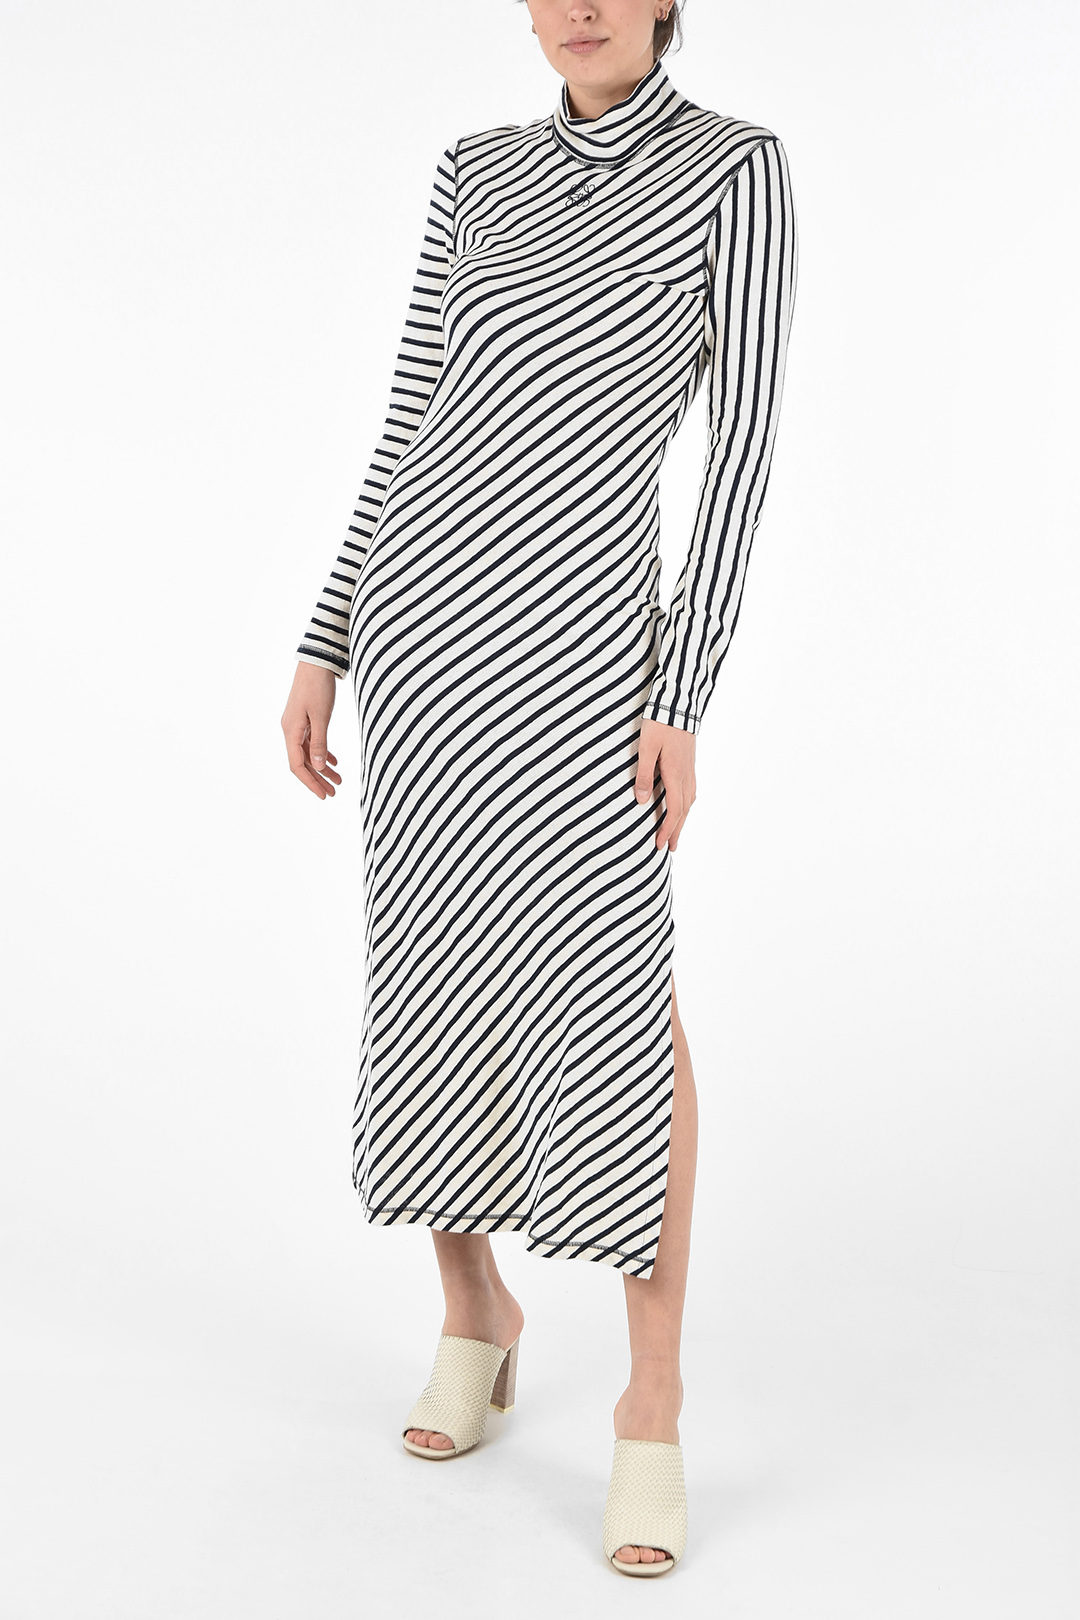 Loewe Striped Cotton Long Sleeve Dress ...